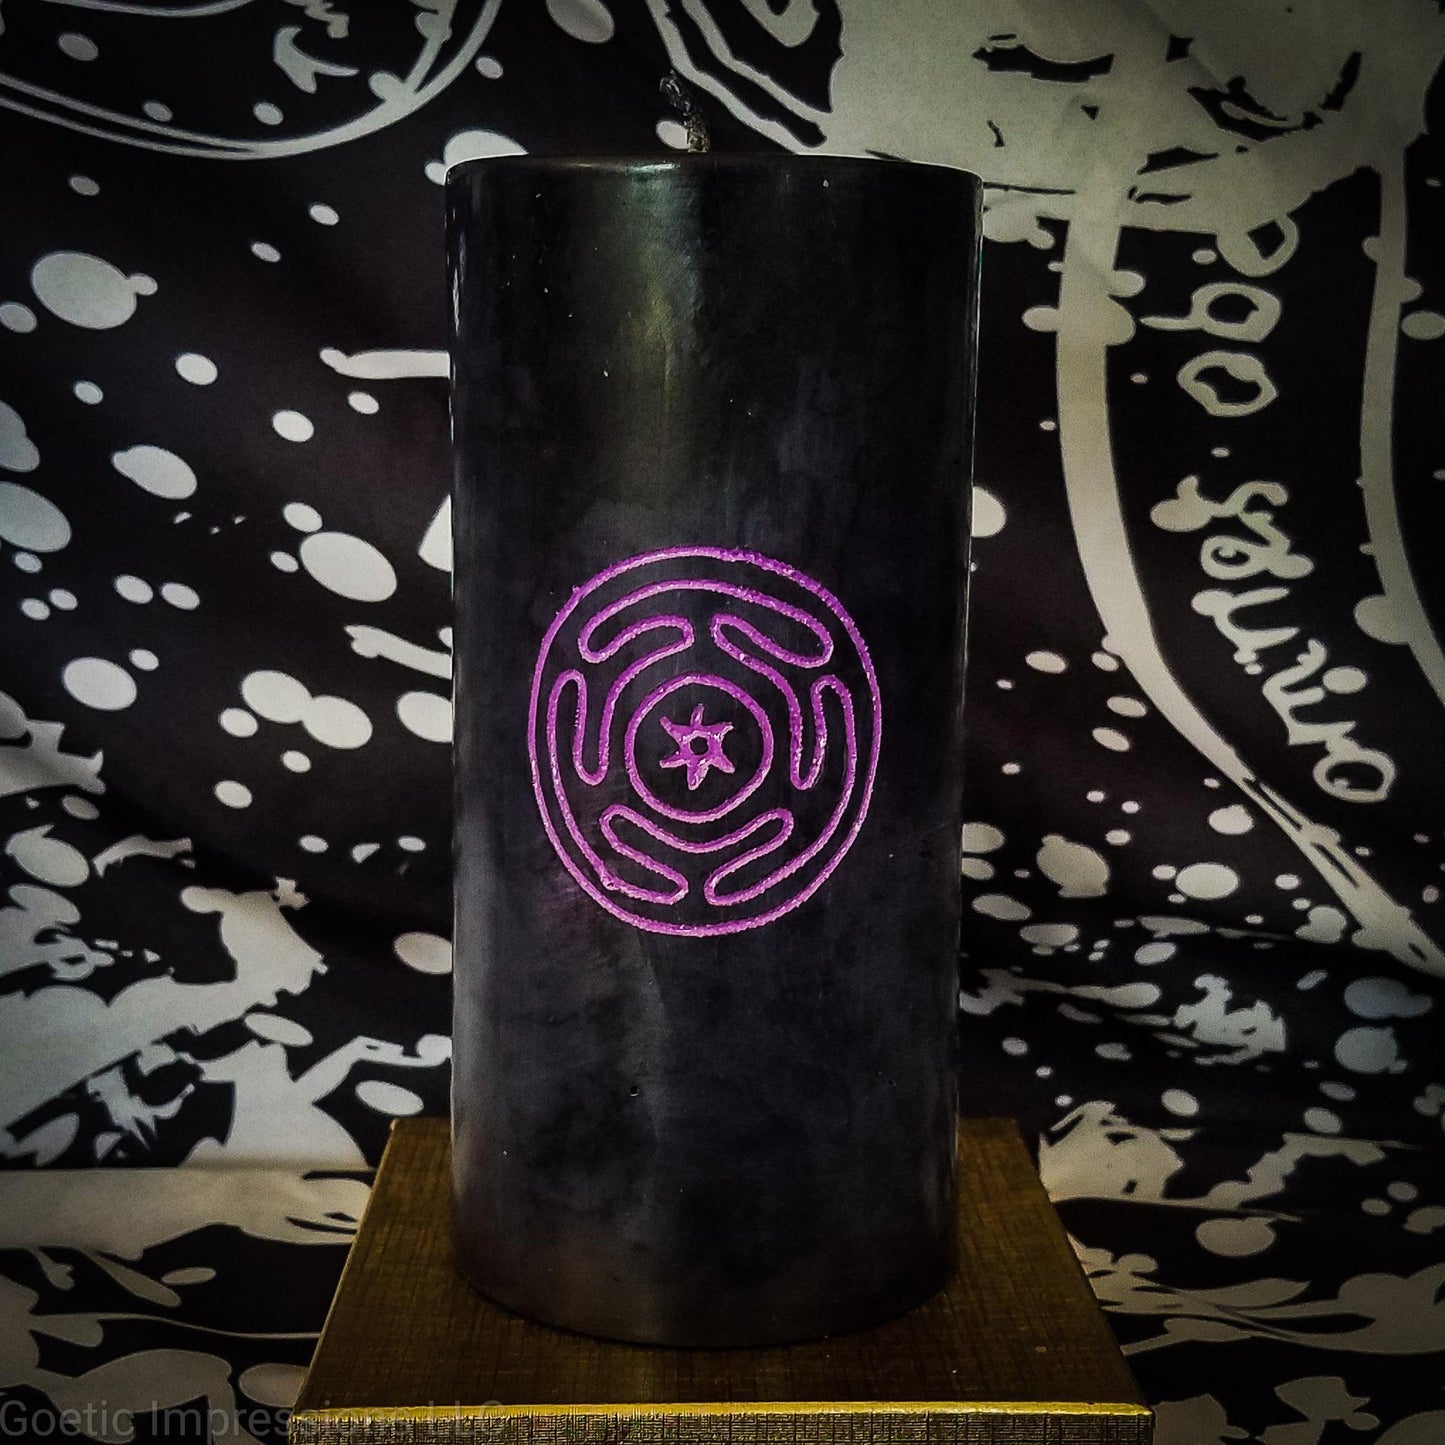 Black Pillar candle with purple Hekate sigil